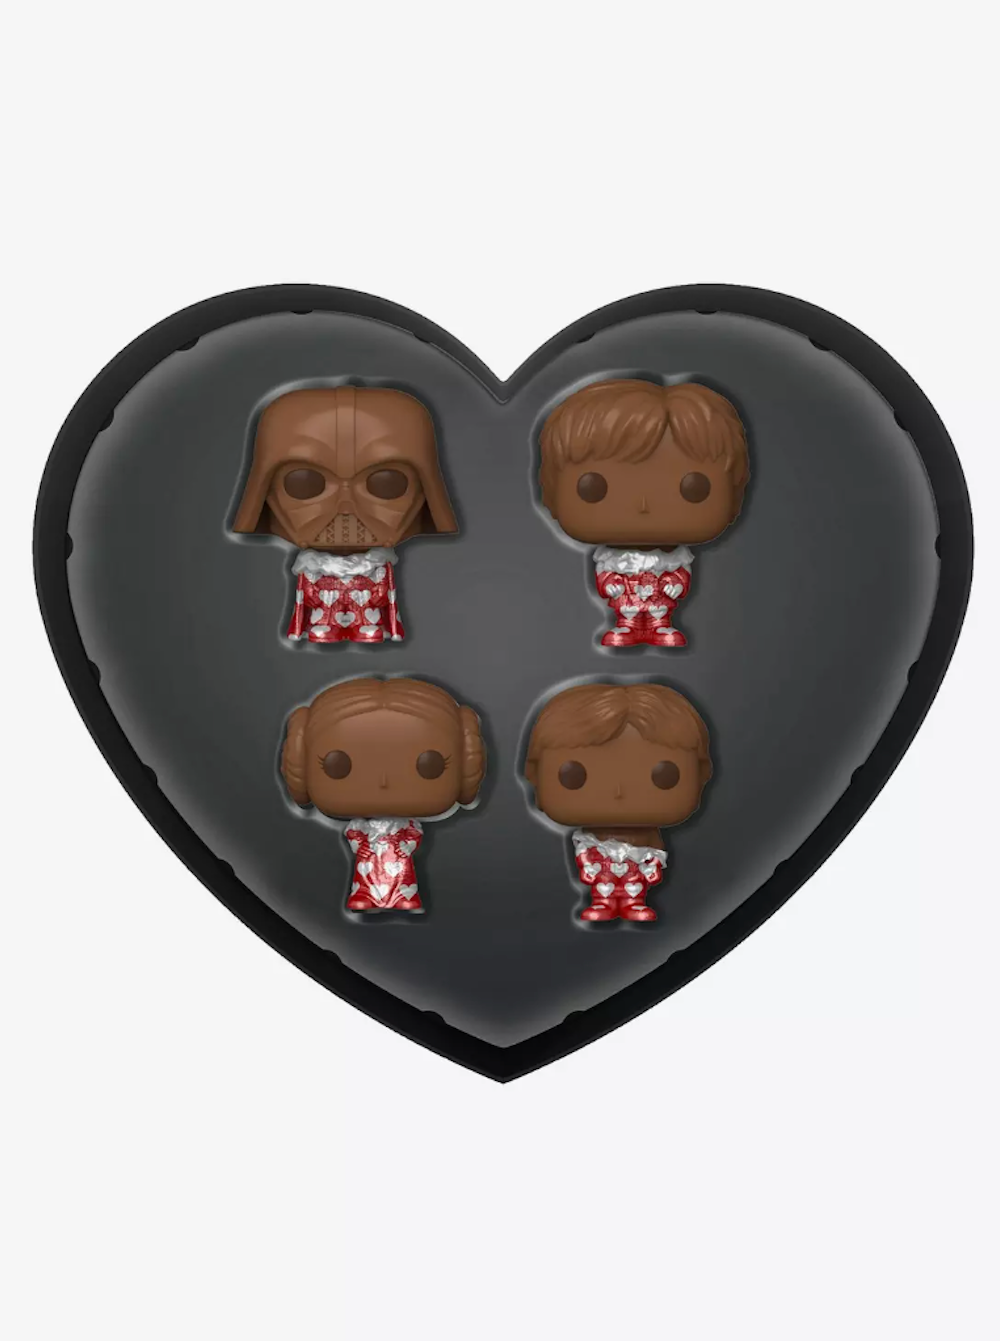 Funko Pocket Pop! Star Wars Characters Valentine Chocolate Vinyl Figure Set New